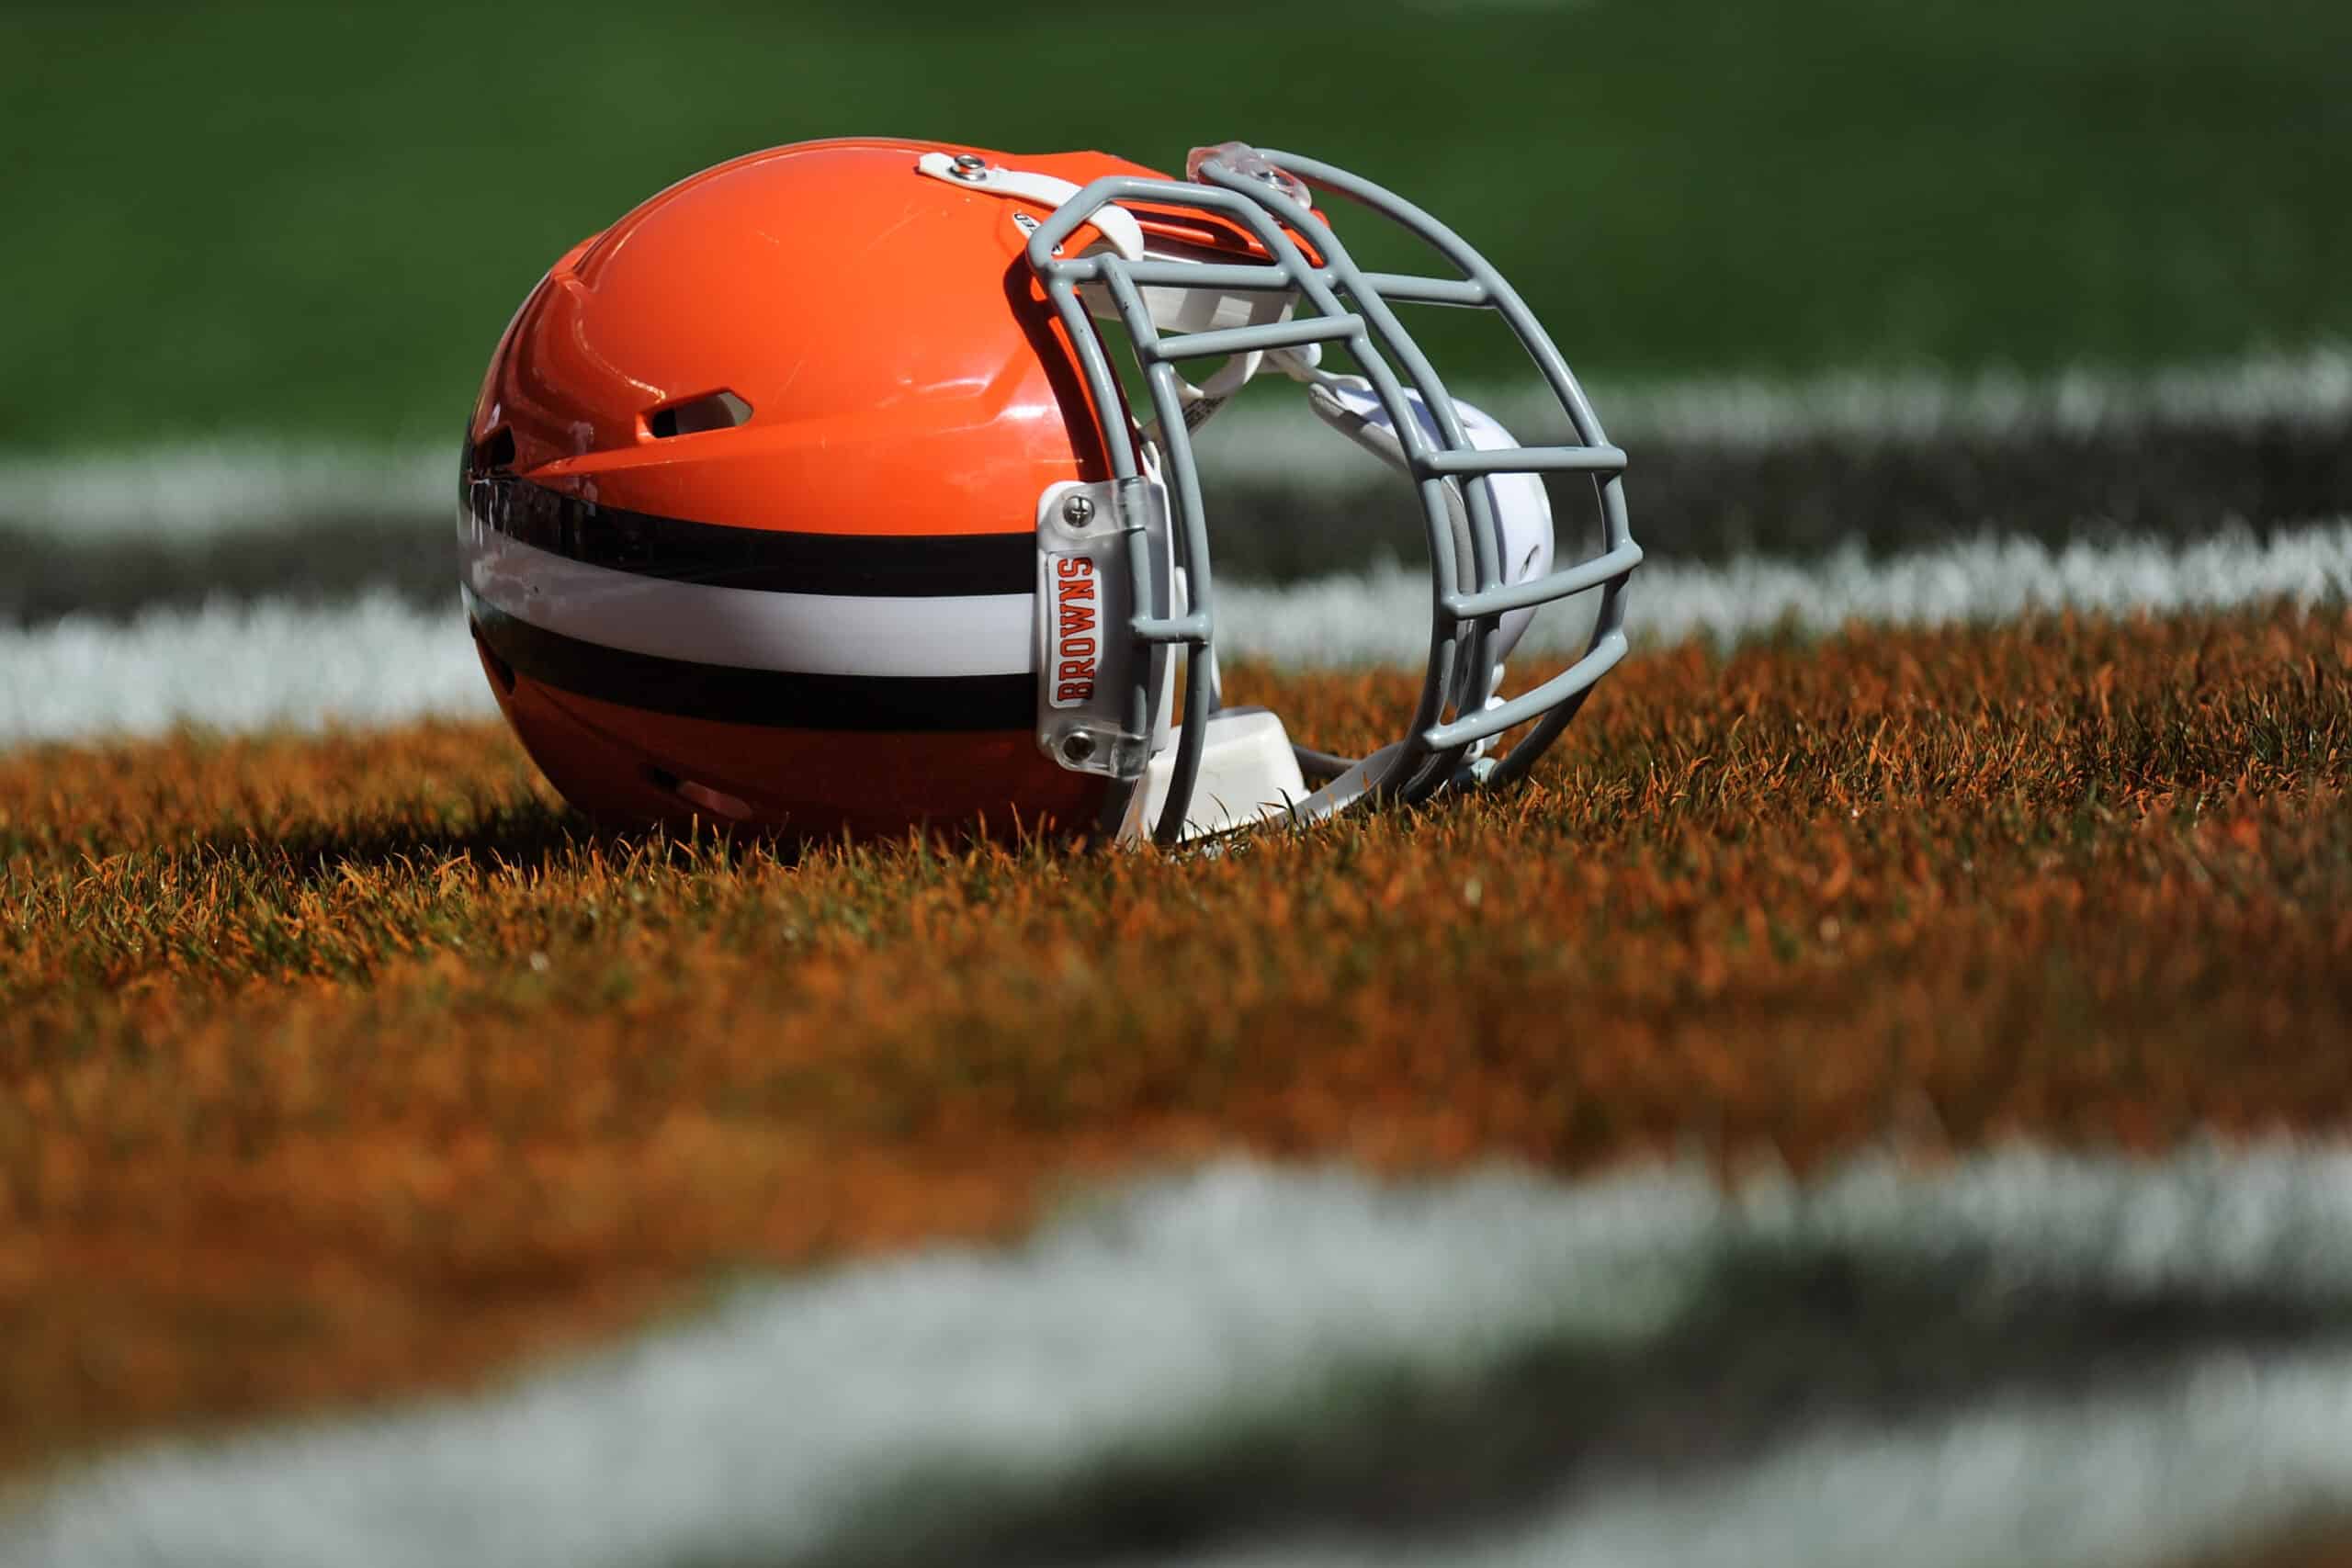 Cleveland Browns helmet